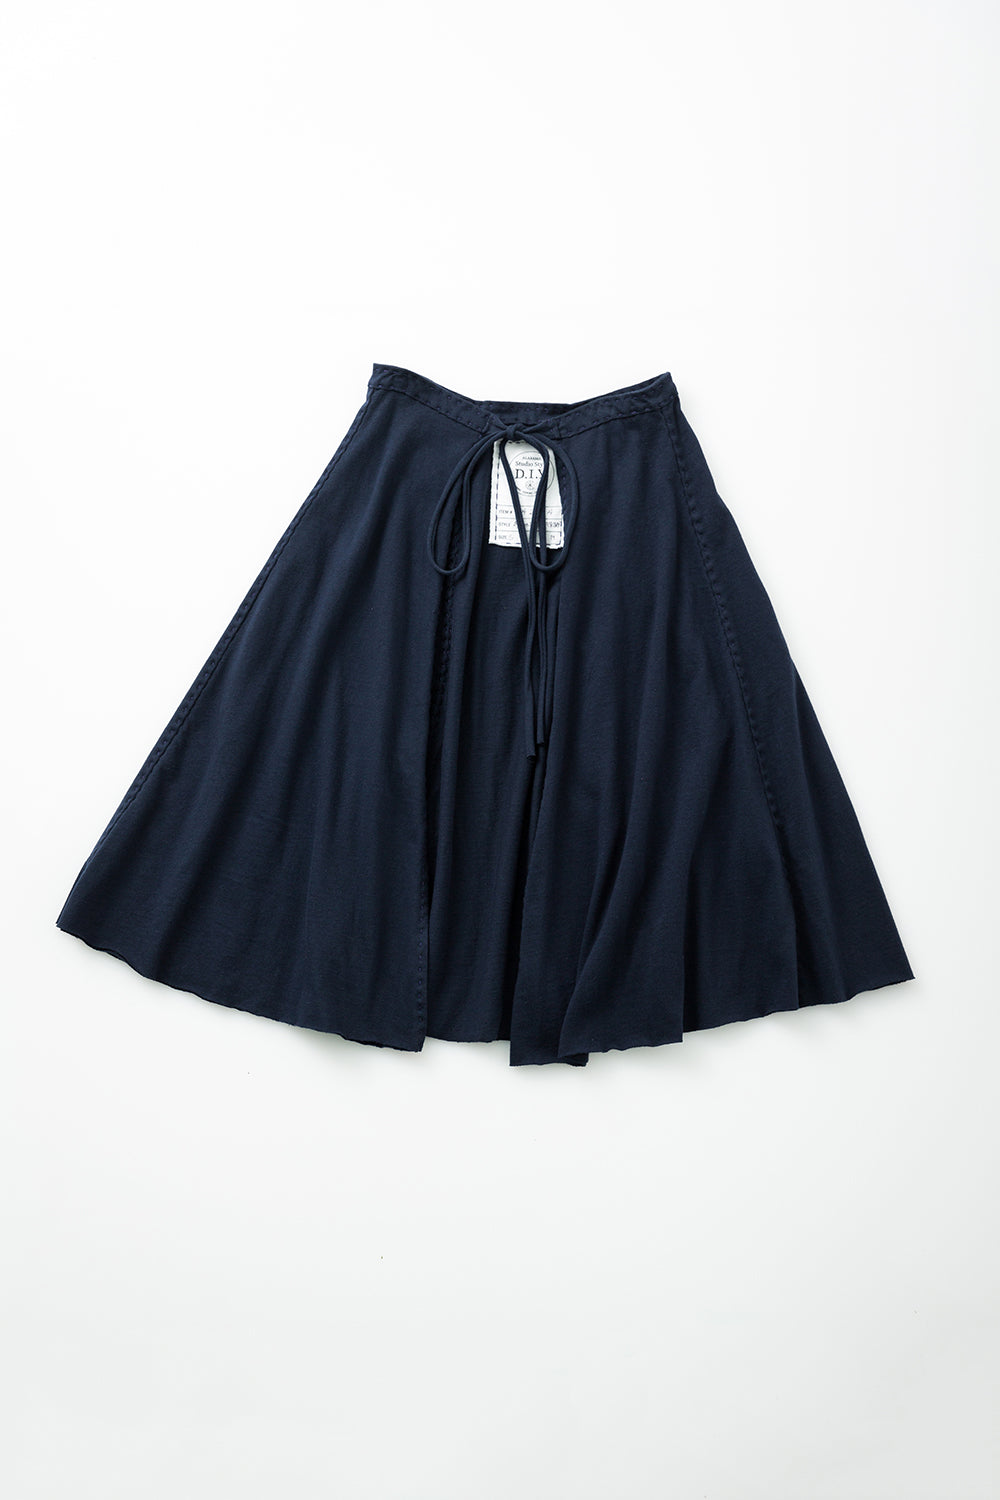 Full Wrap Skirt Pattern | Skirt Sewing Pattern | The School of Making™